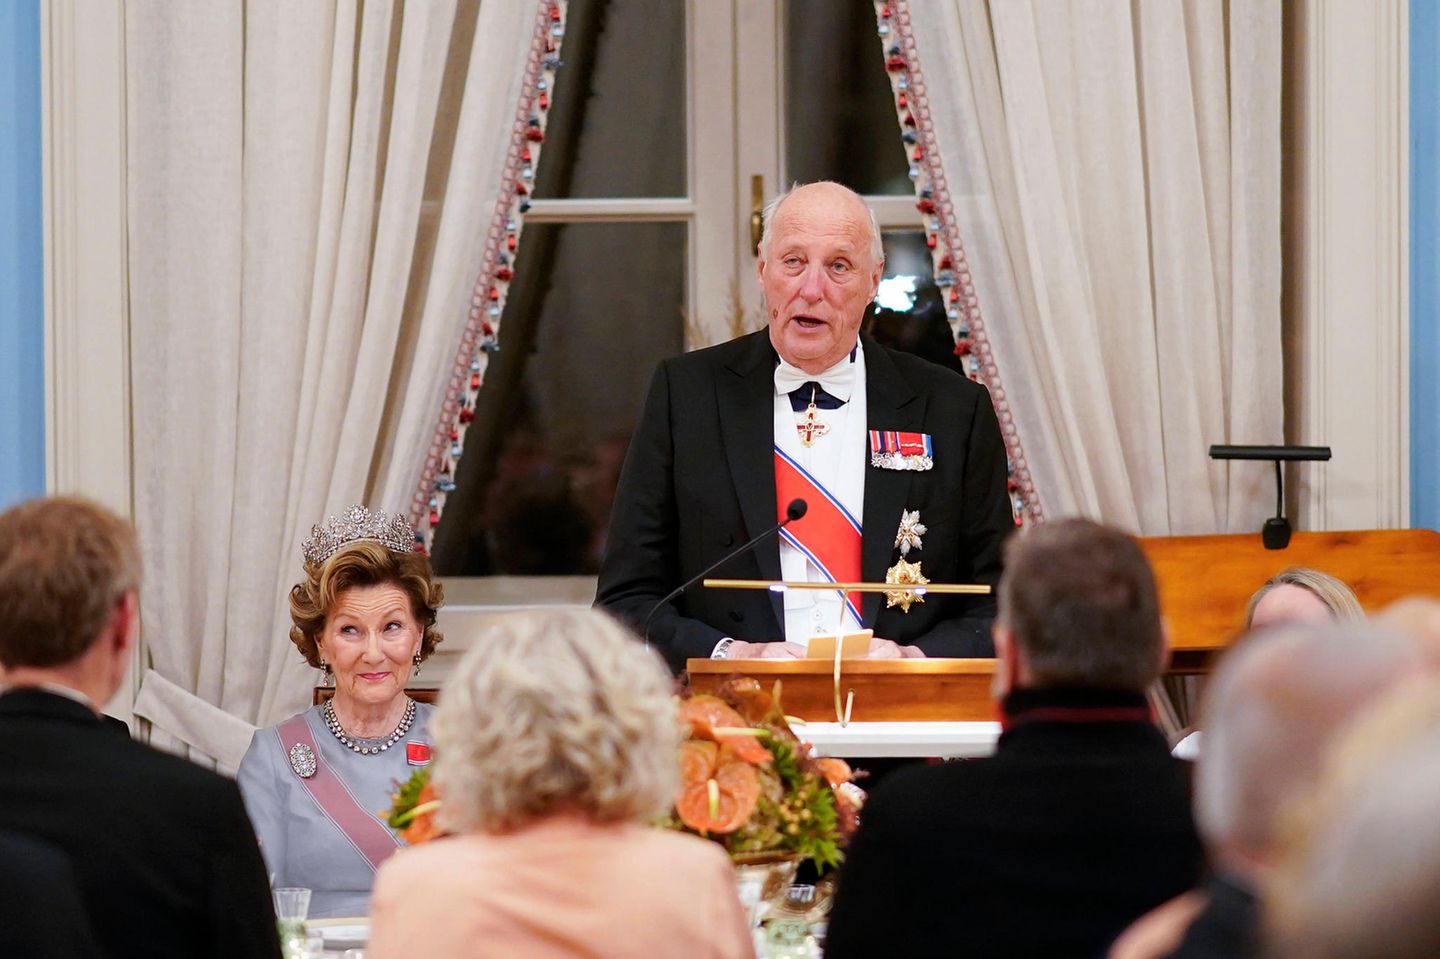 RTK: König Harald begrüßt seine Gäste zum Parlamentsdinner